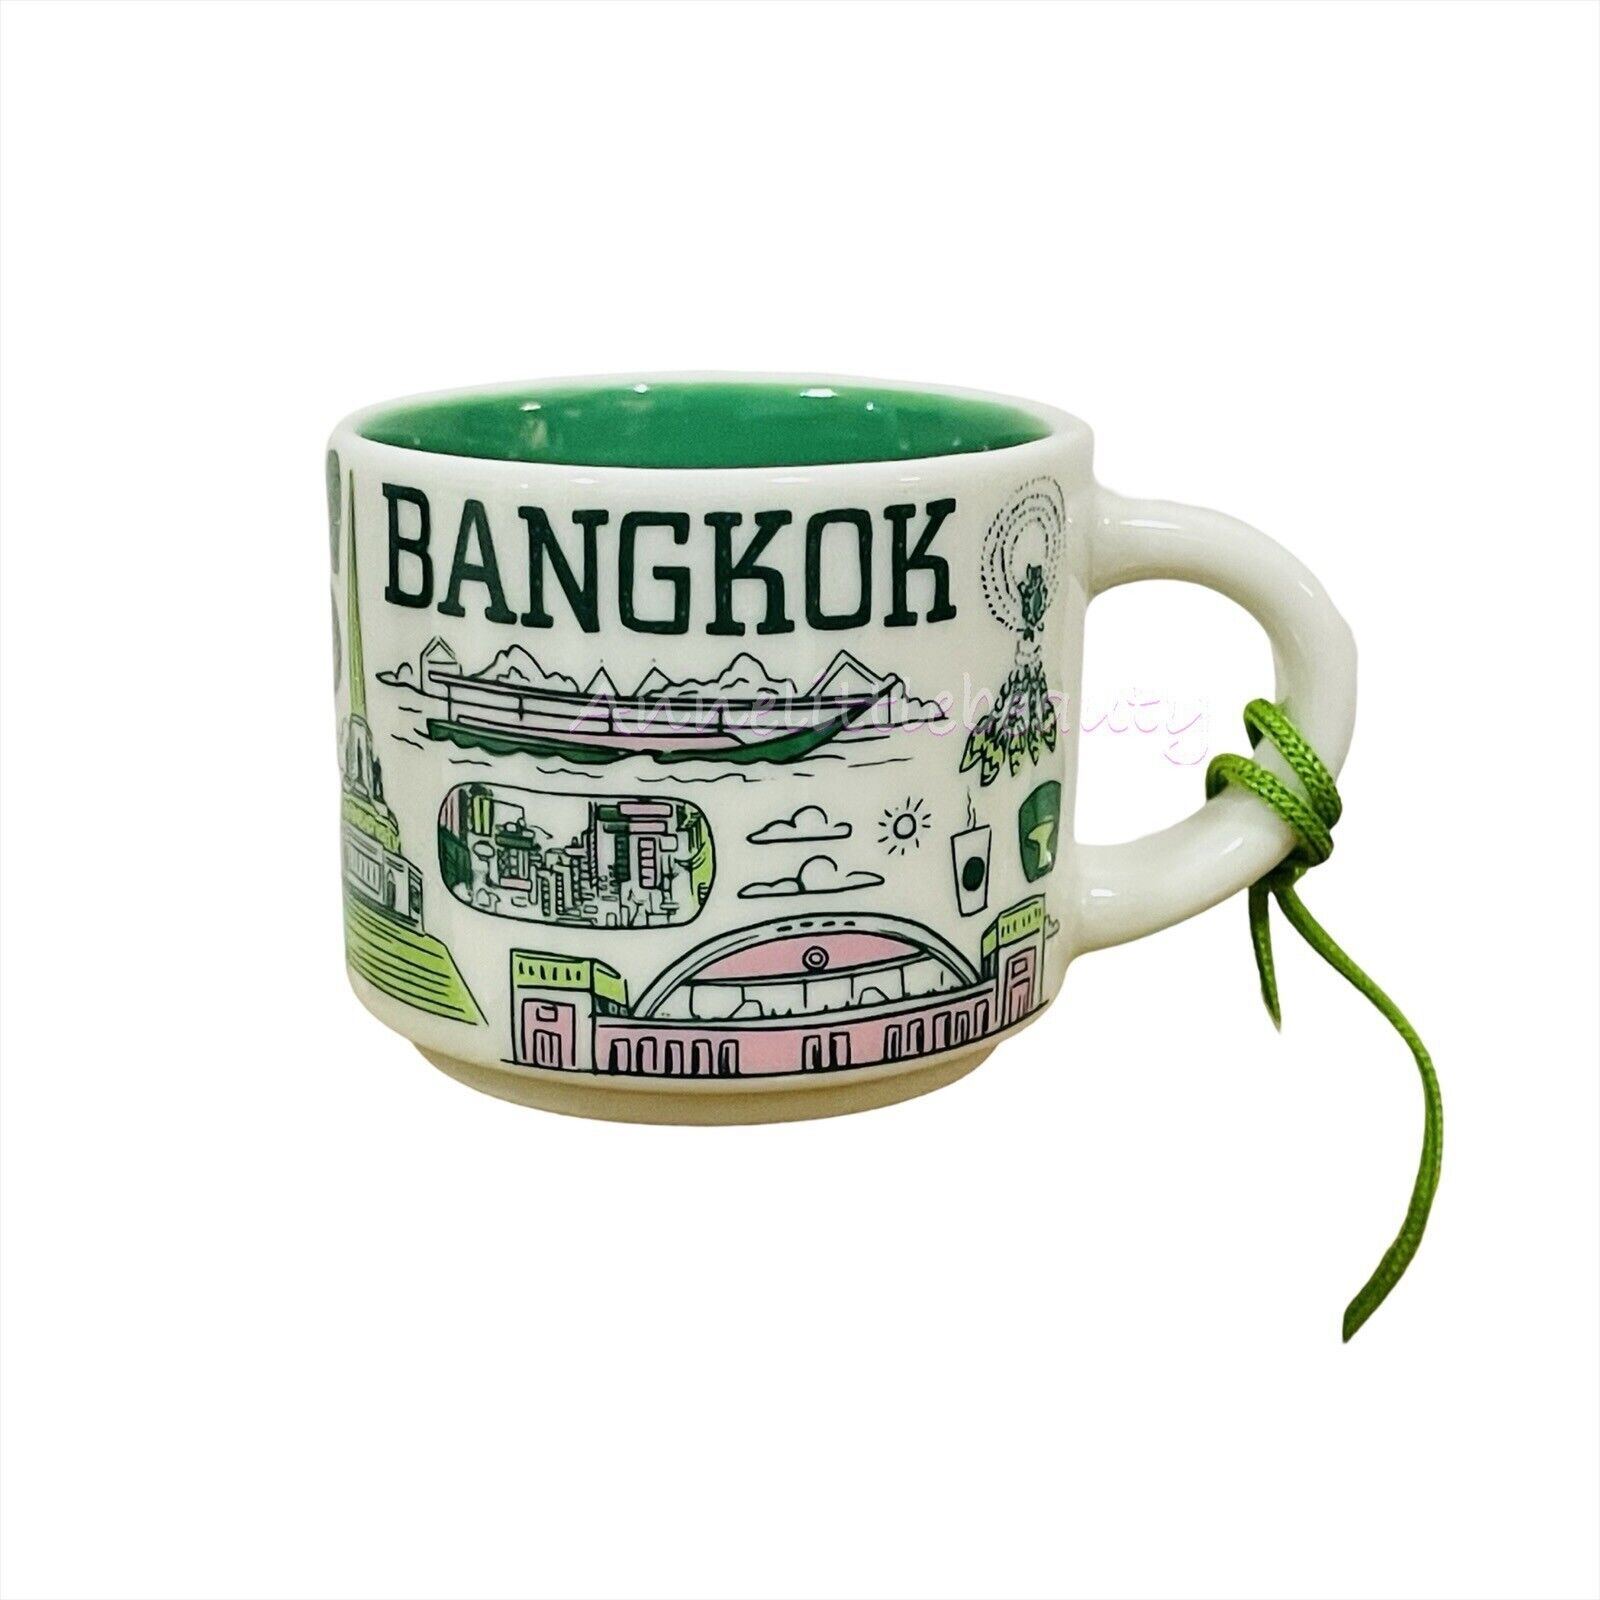 Starbucks Mug Demi You Been There Cup BANGKOK Thailand 2 oz. Ornament